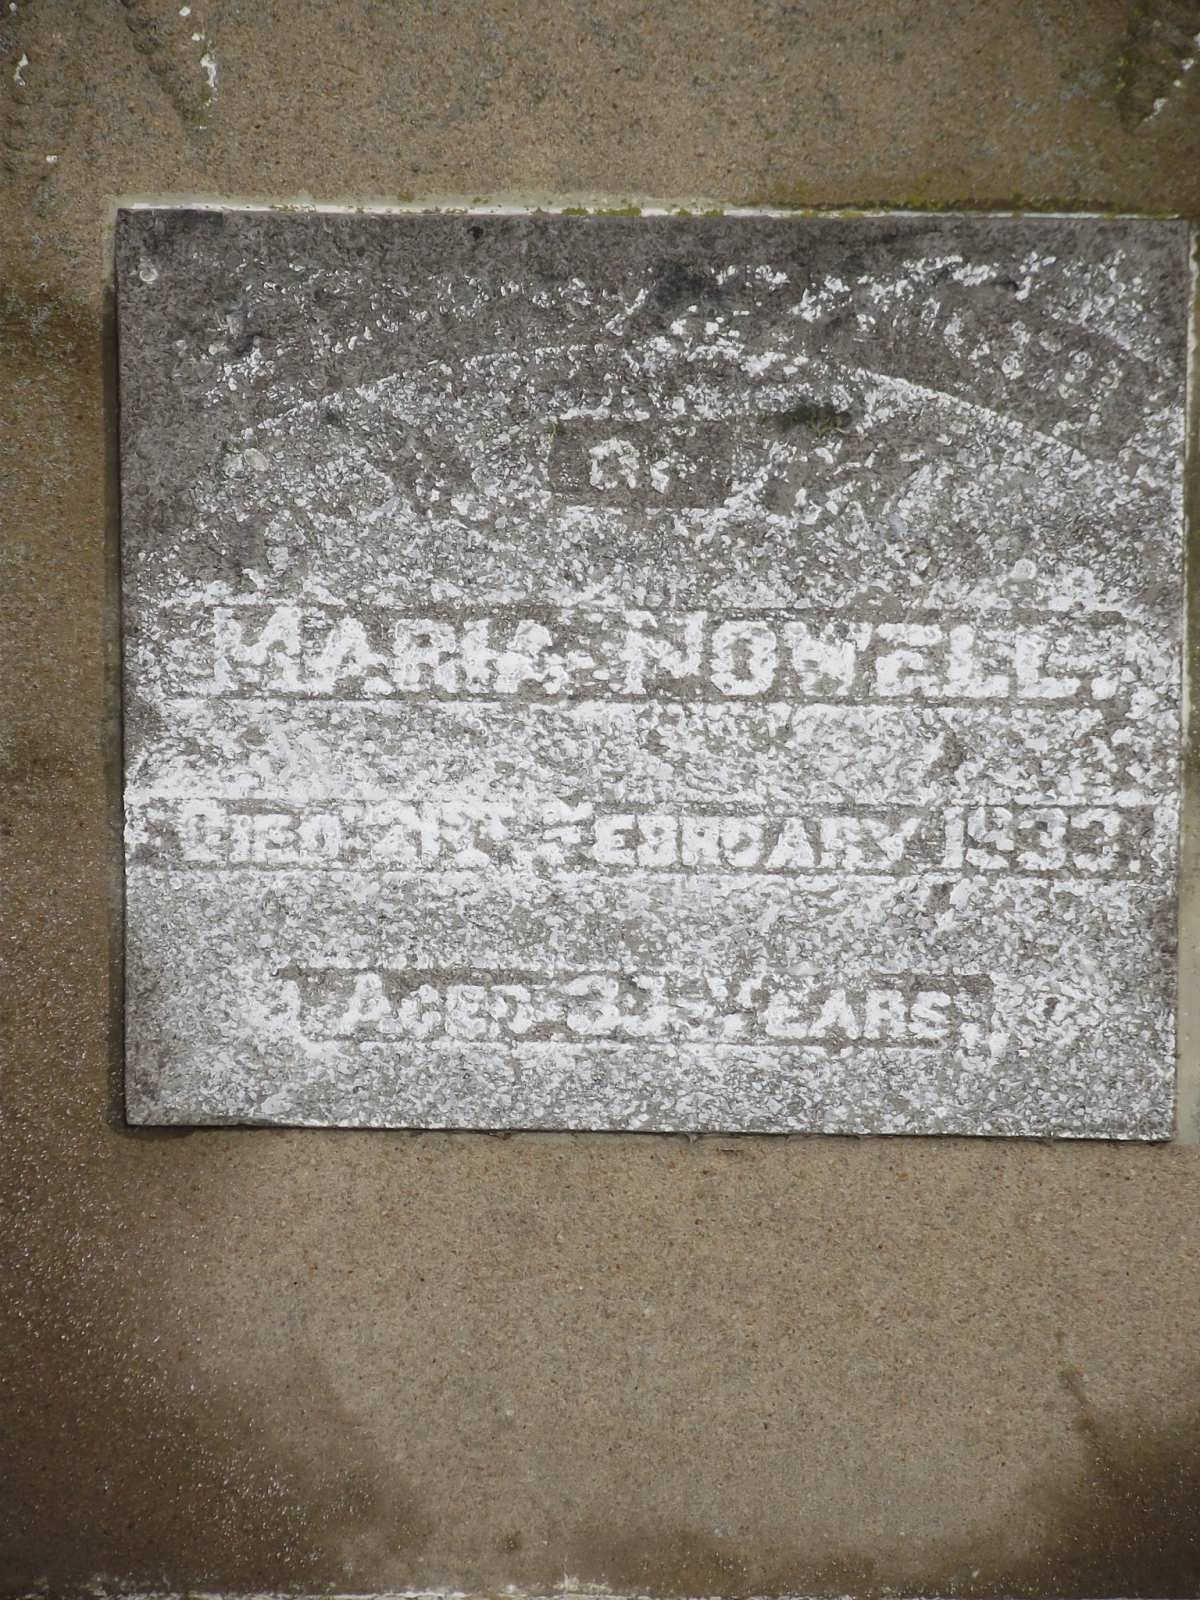 NOWELL Maria -1933